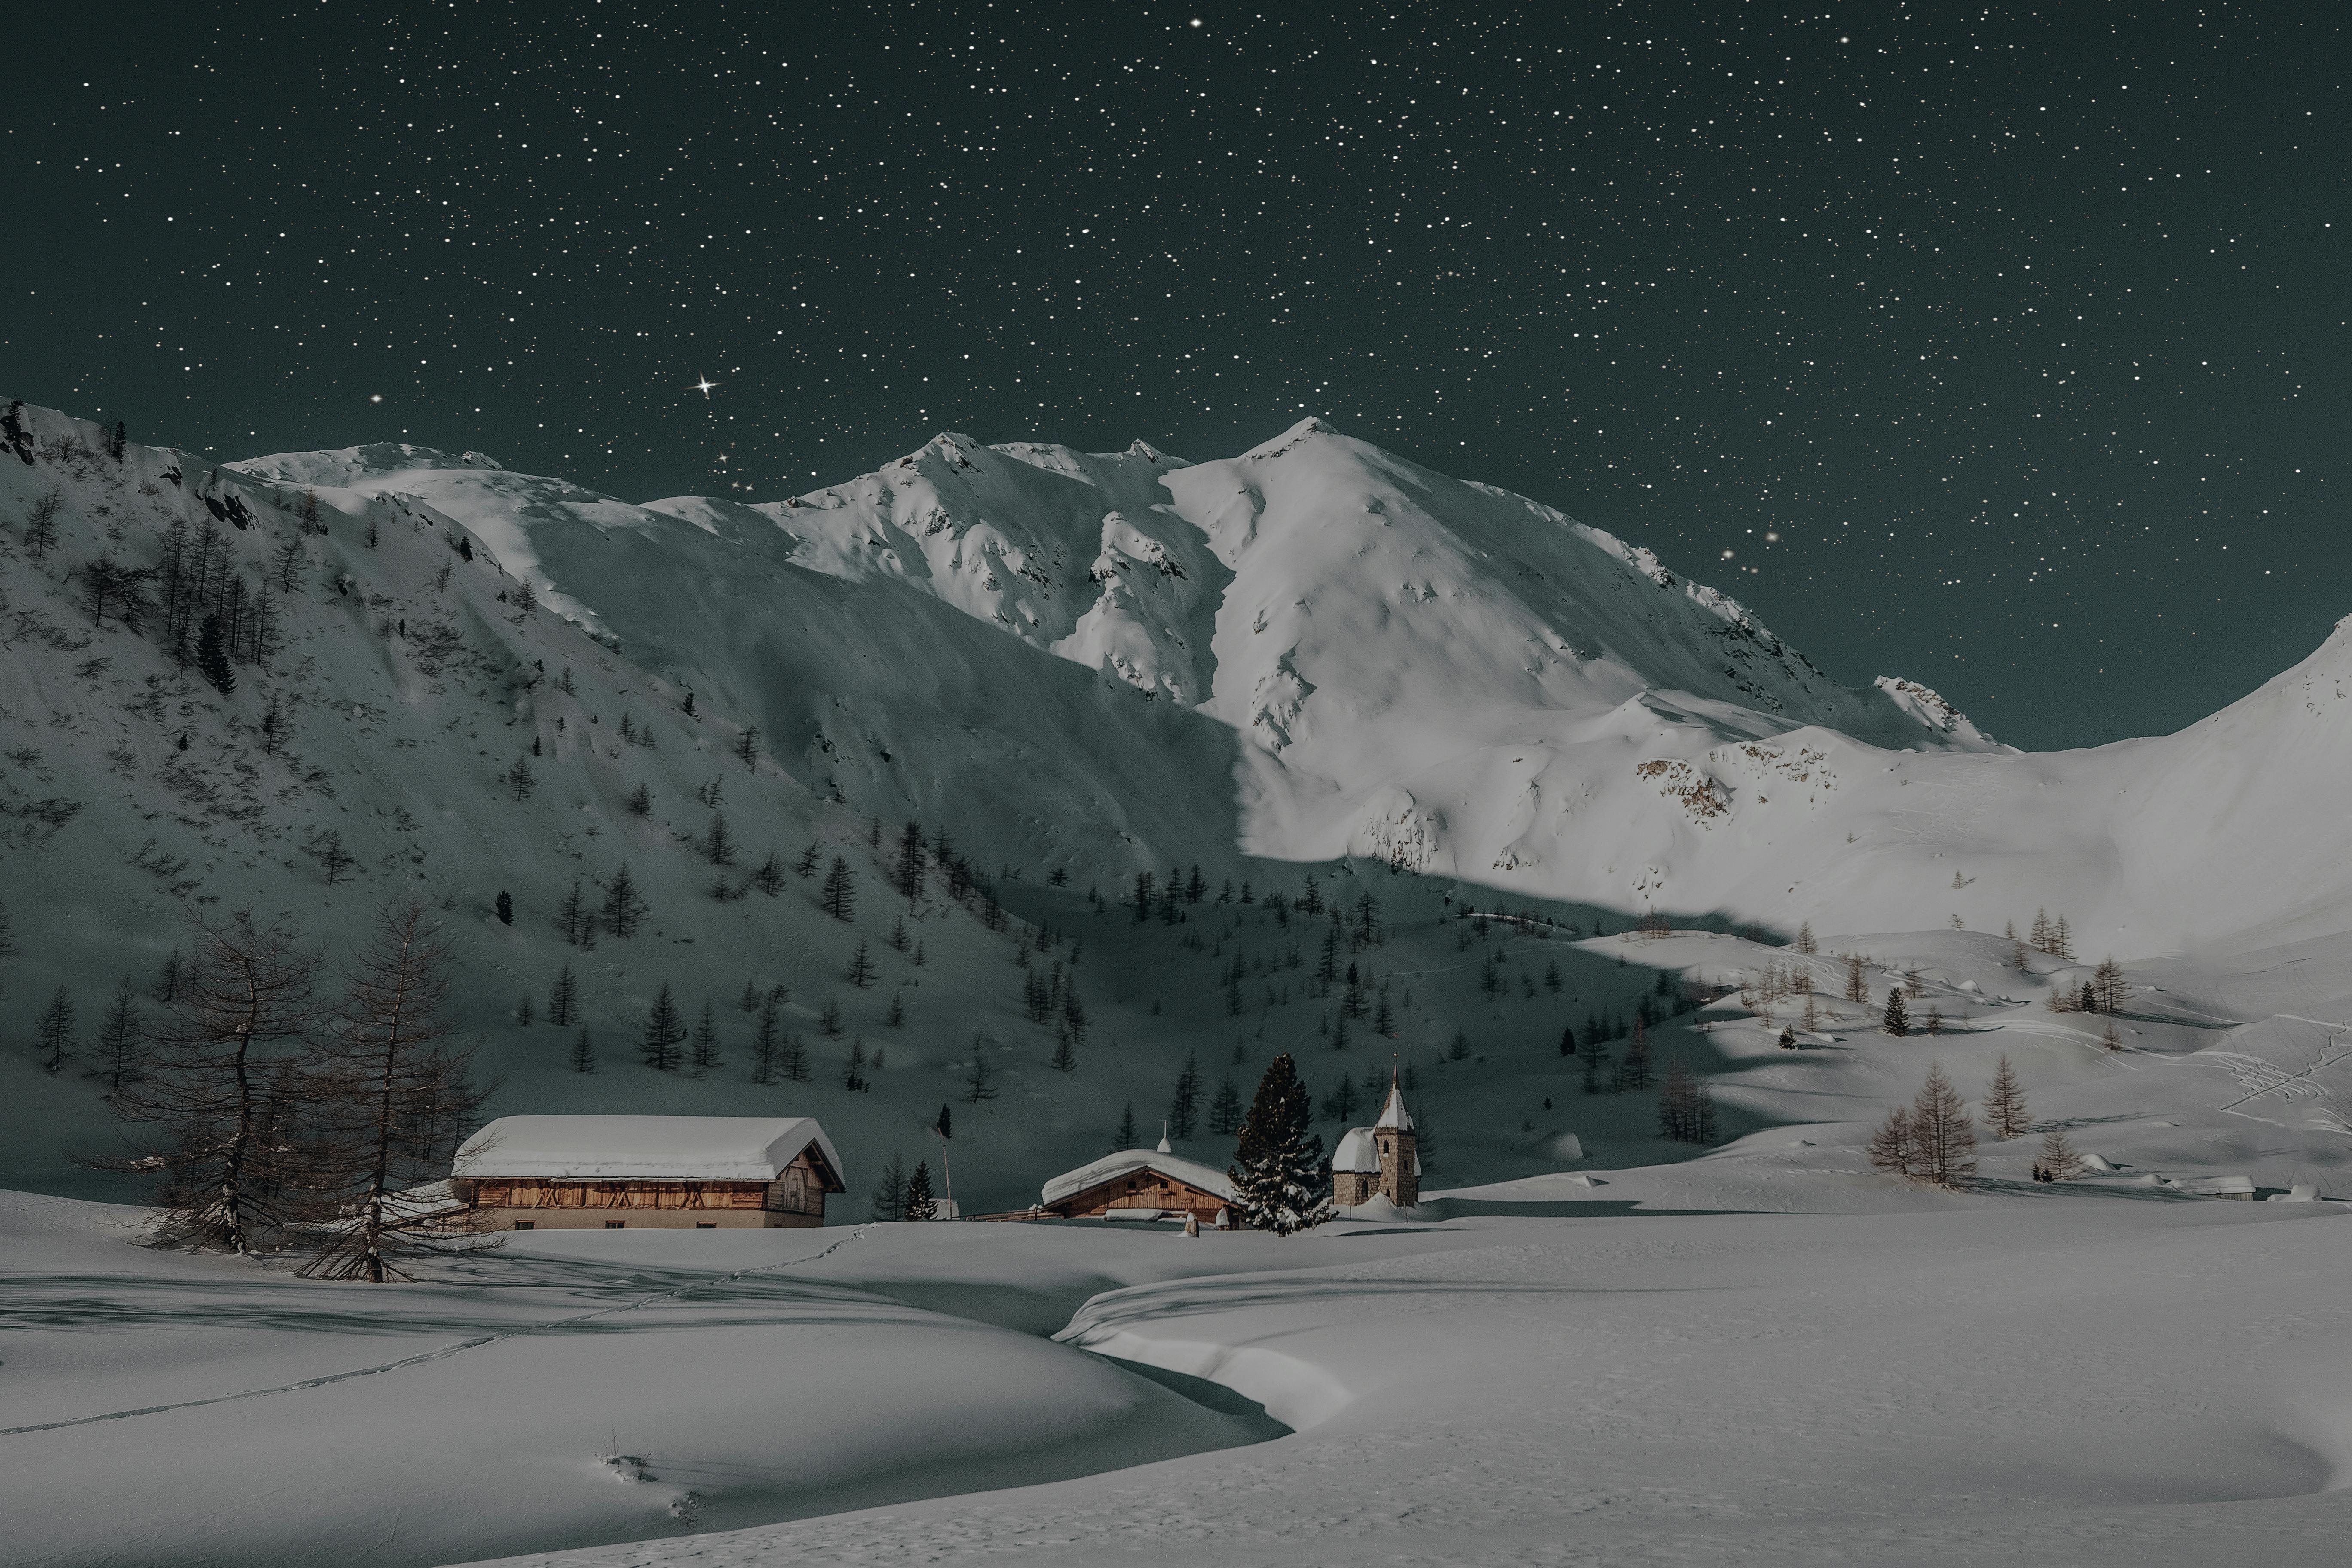 Night sky over a snowy forest MacBook Air Wallpaper Download   AllMacWallpaper